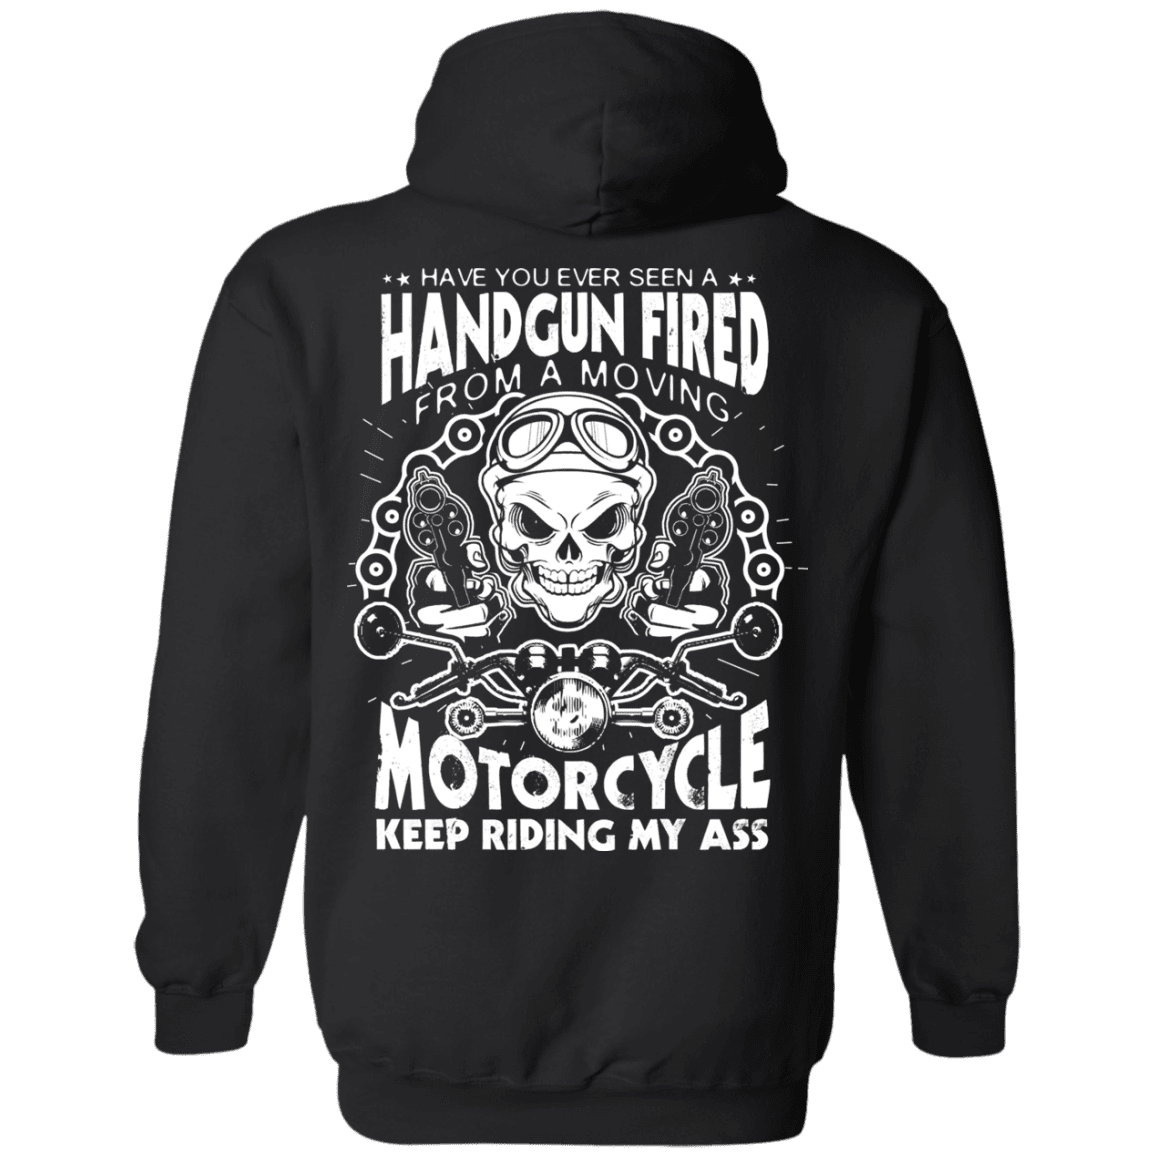 Motorcycle Keep Riding My Ass T-shirt & Hoodies - American Legend Rider